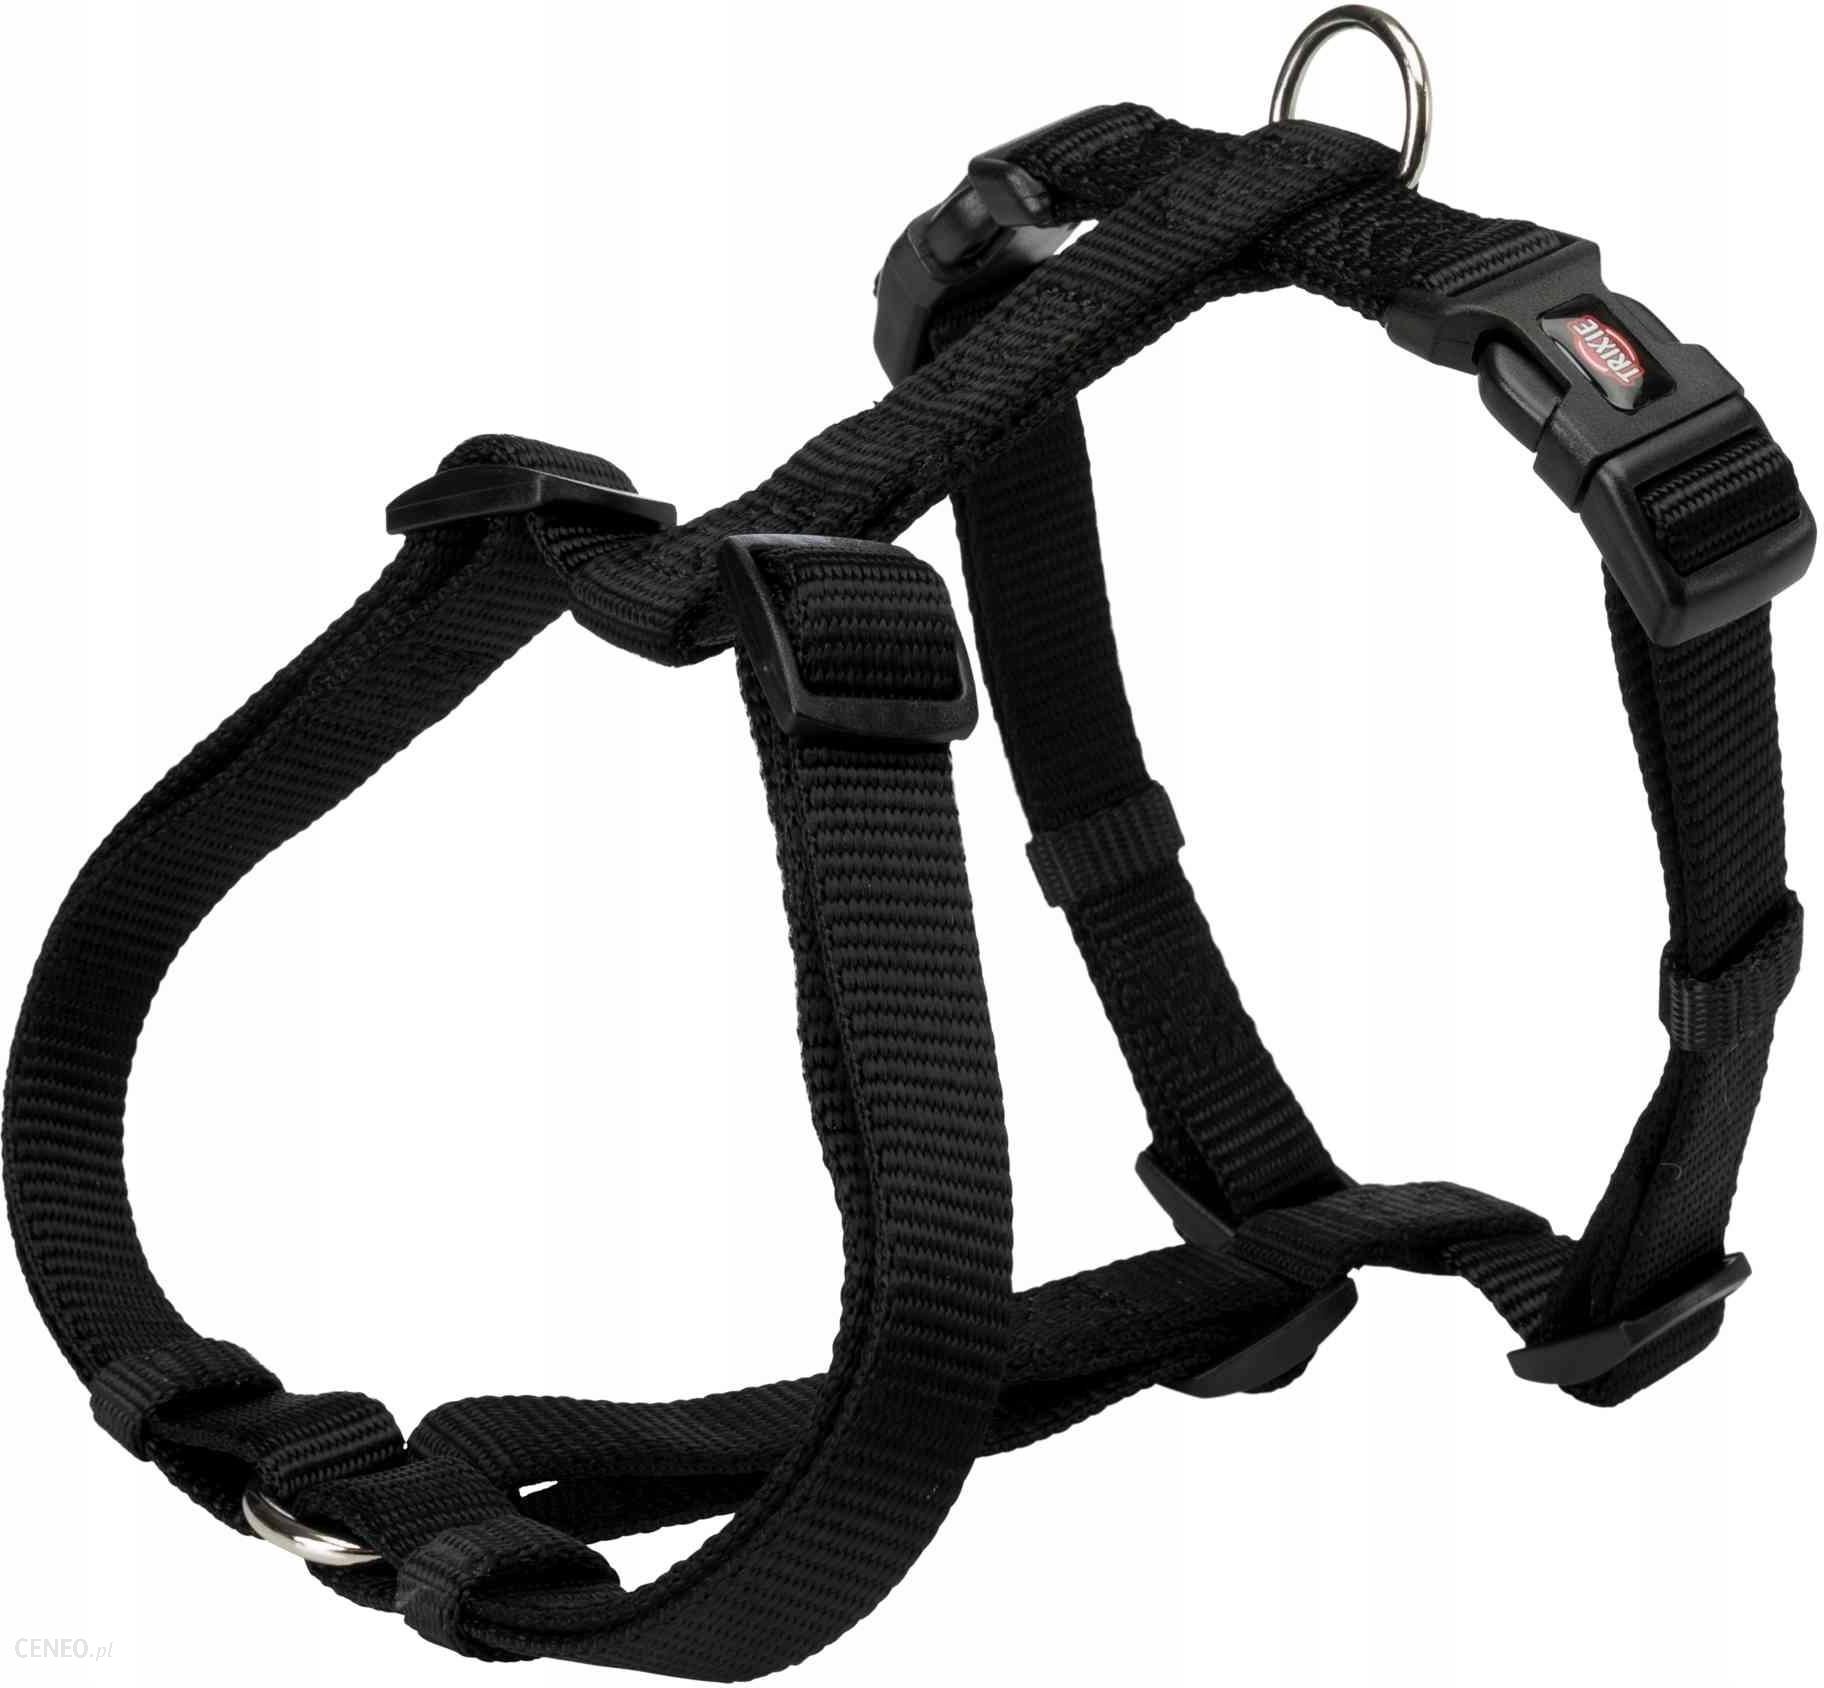 Правильная шлейка для собаки. Шлейка Trixie Premium h-harness. Trixie шлейка XS-S H-harness. Шлейка Trixie Premium h-harness XXS. Шлейка Premium y-harness, Trixie.